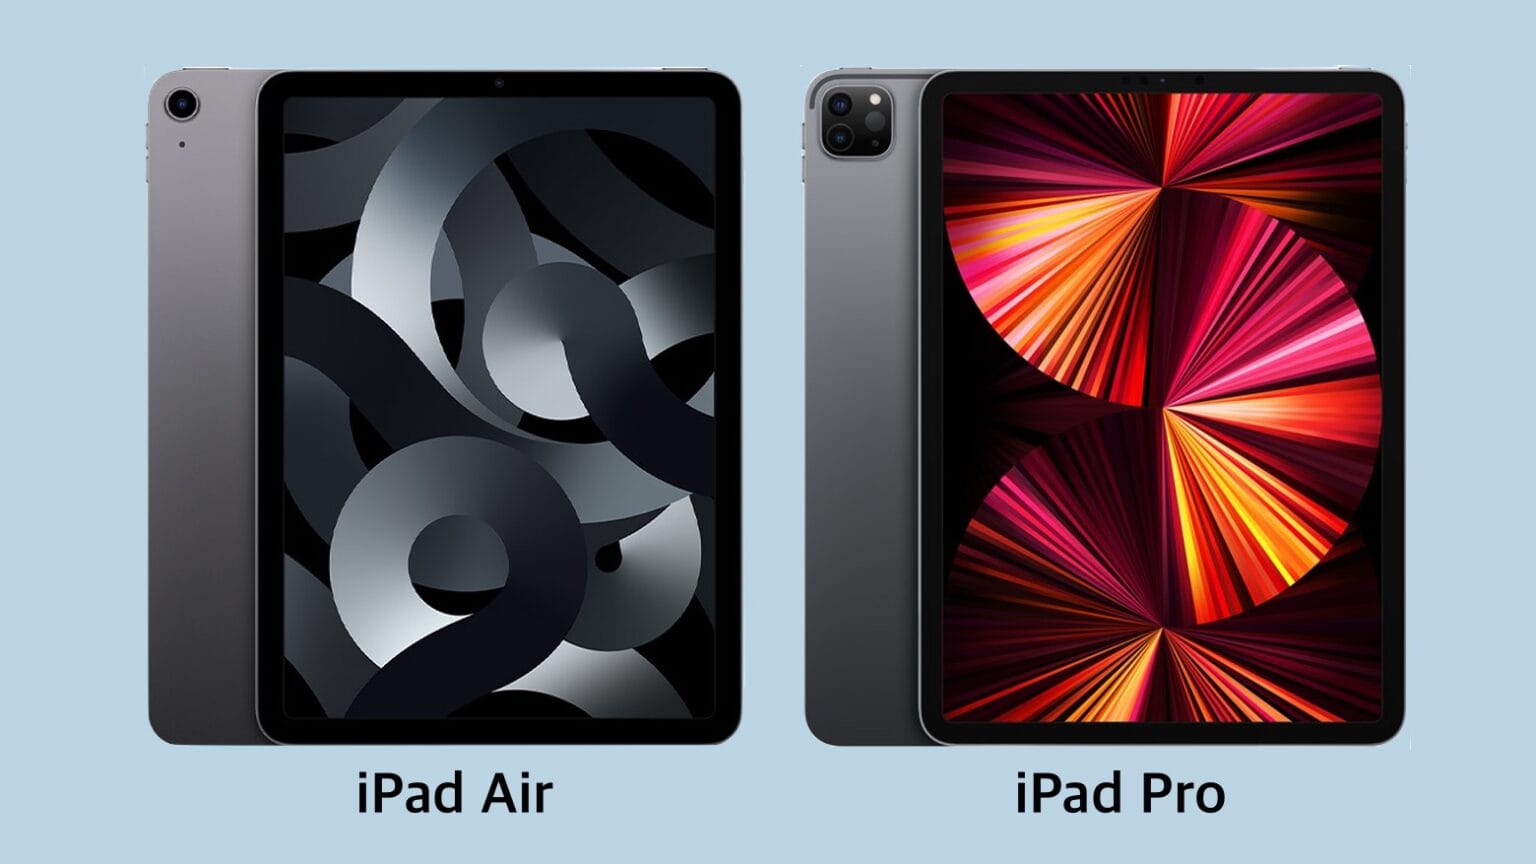 iPad Air 5 has the same performance as fast as iPad Pro